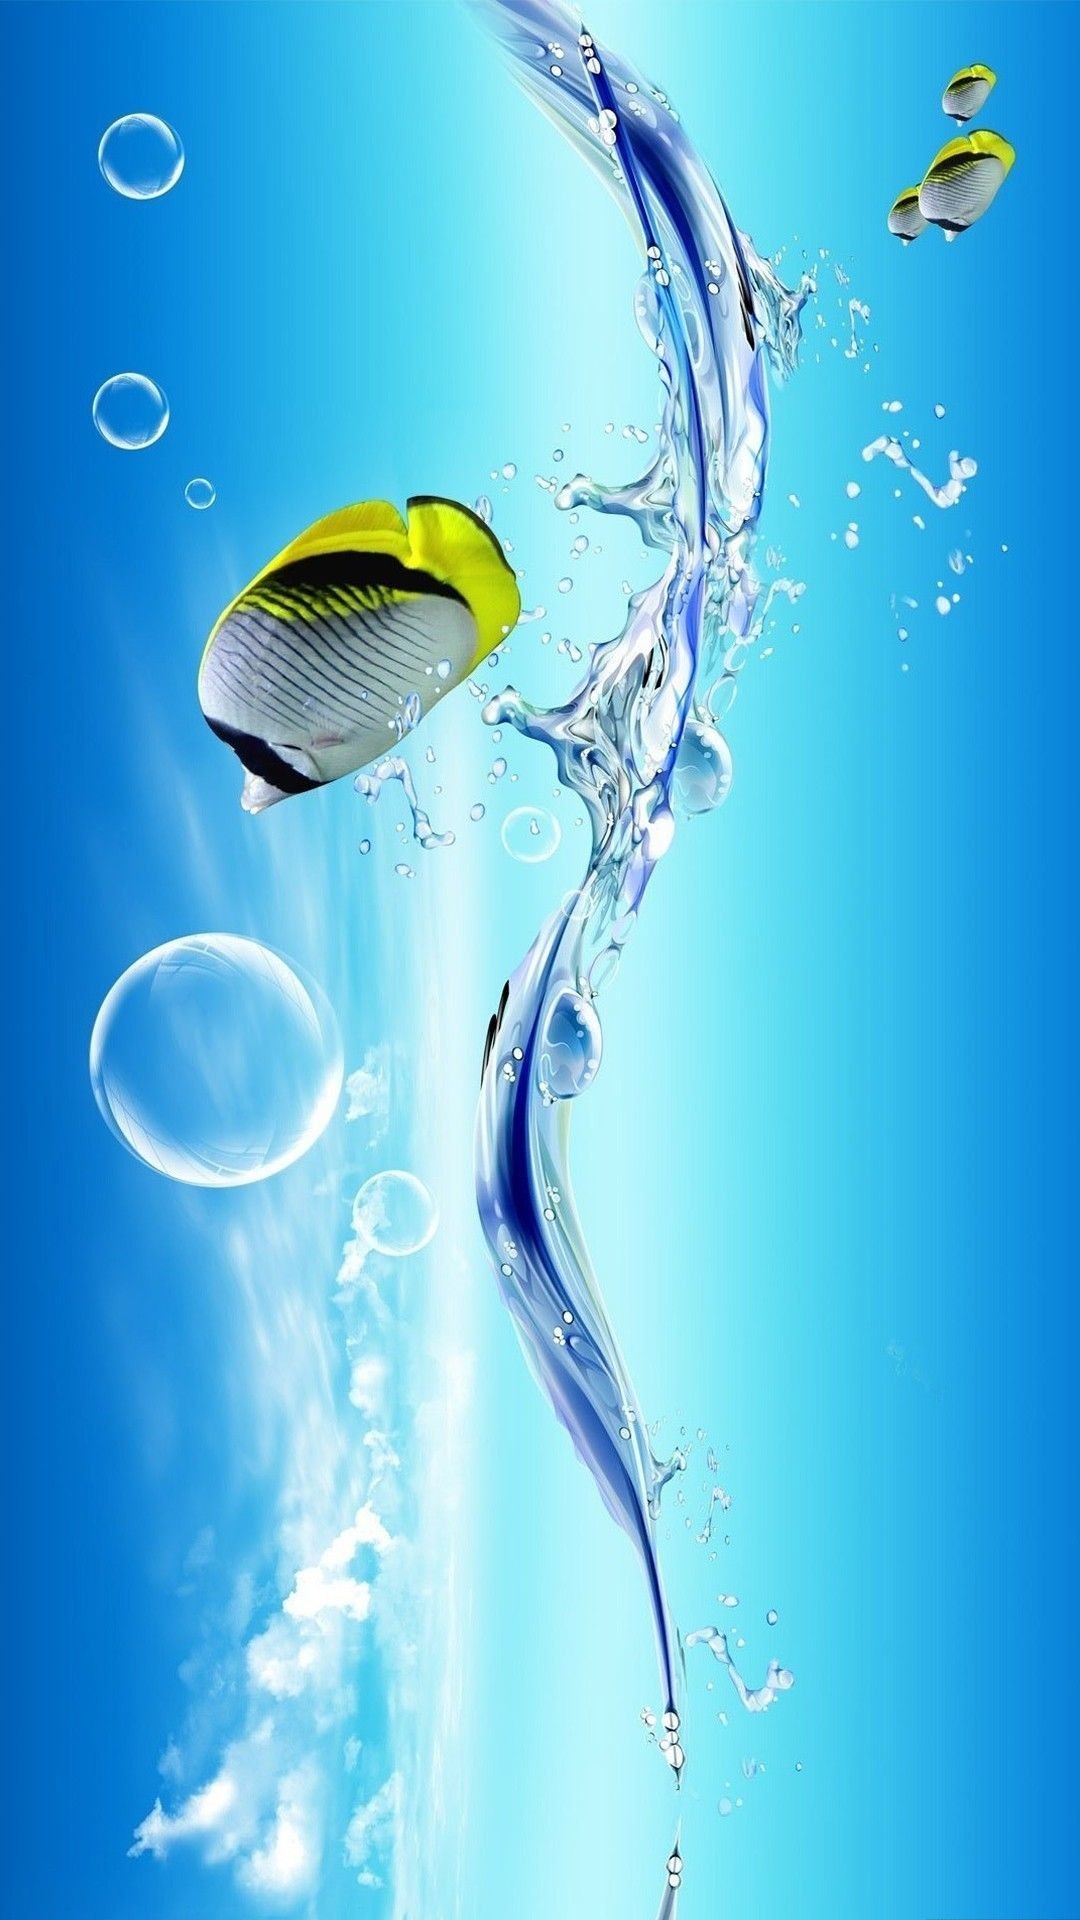 1080x1920 3D Clownfish iPhone 6 plus wallpaper - ocean, fish, water, bubble